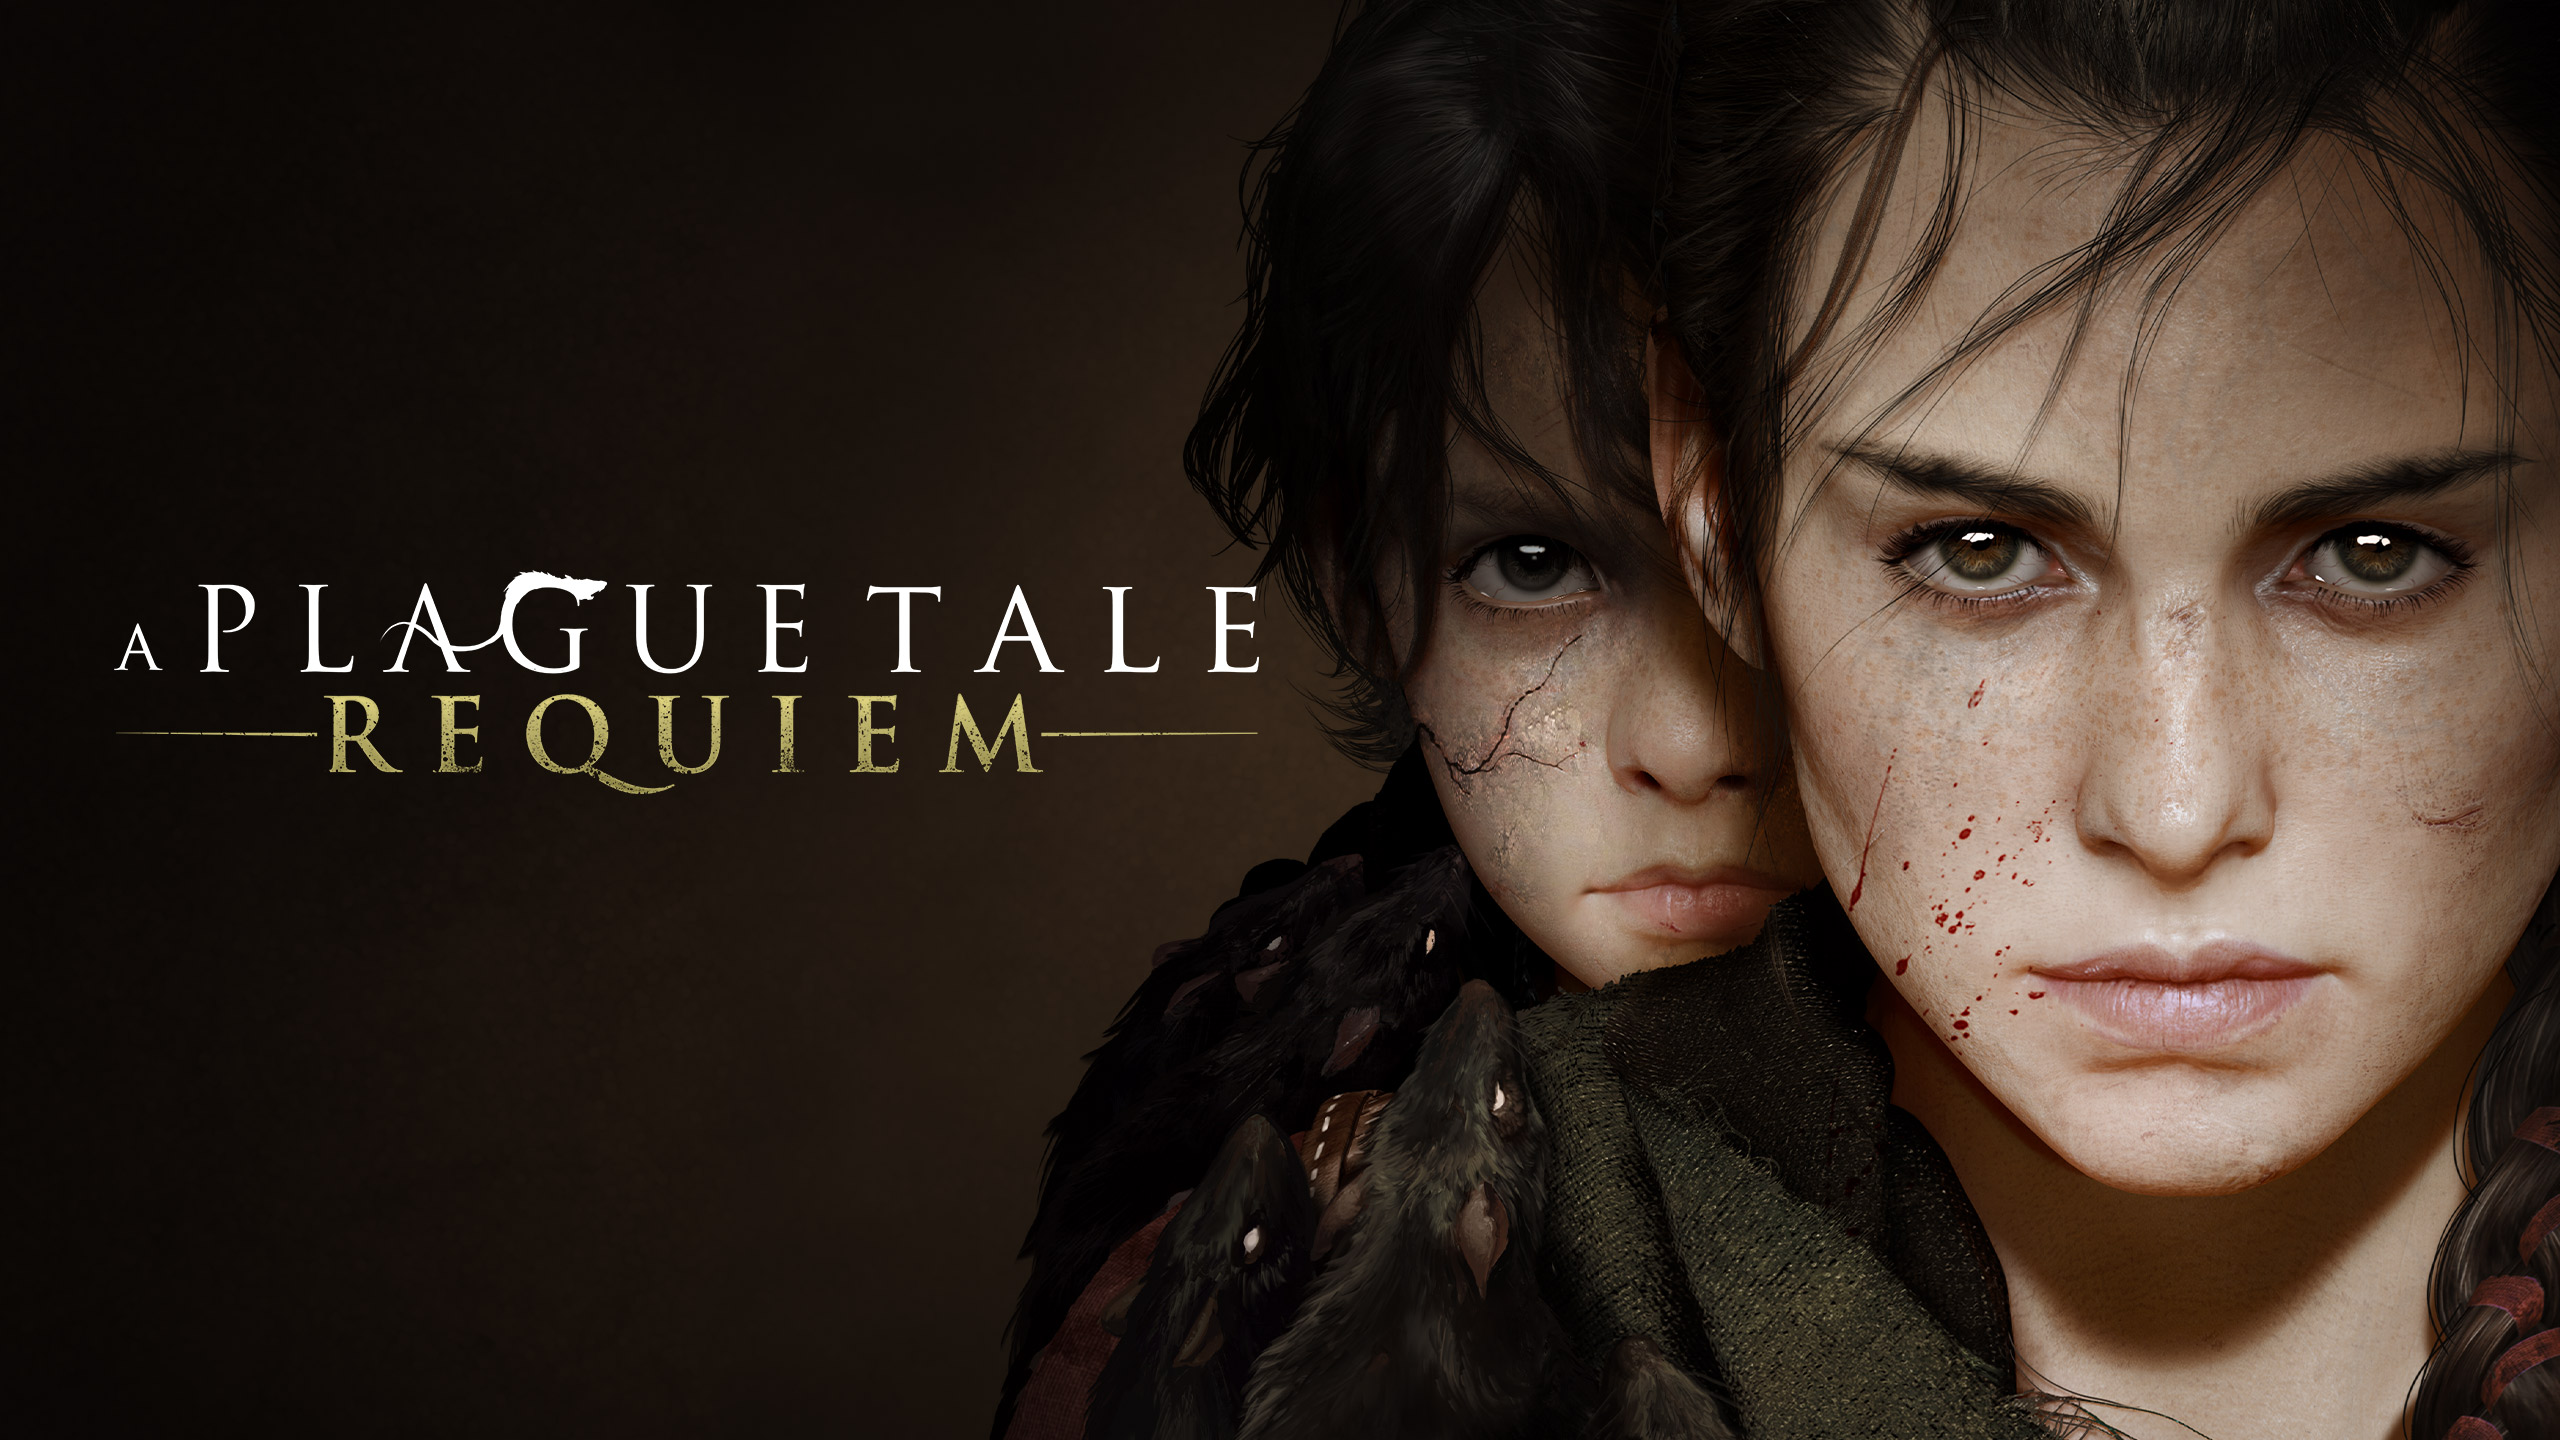 A Plague Tale: Requiem - Best Character Designs